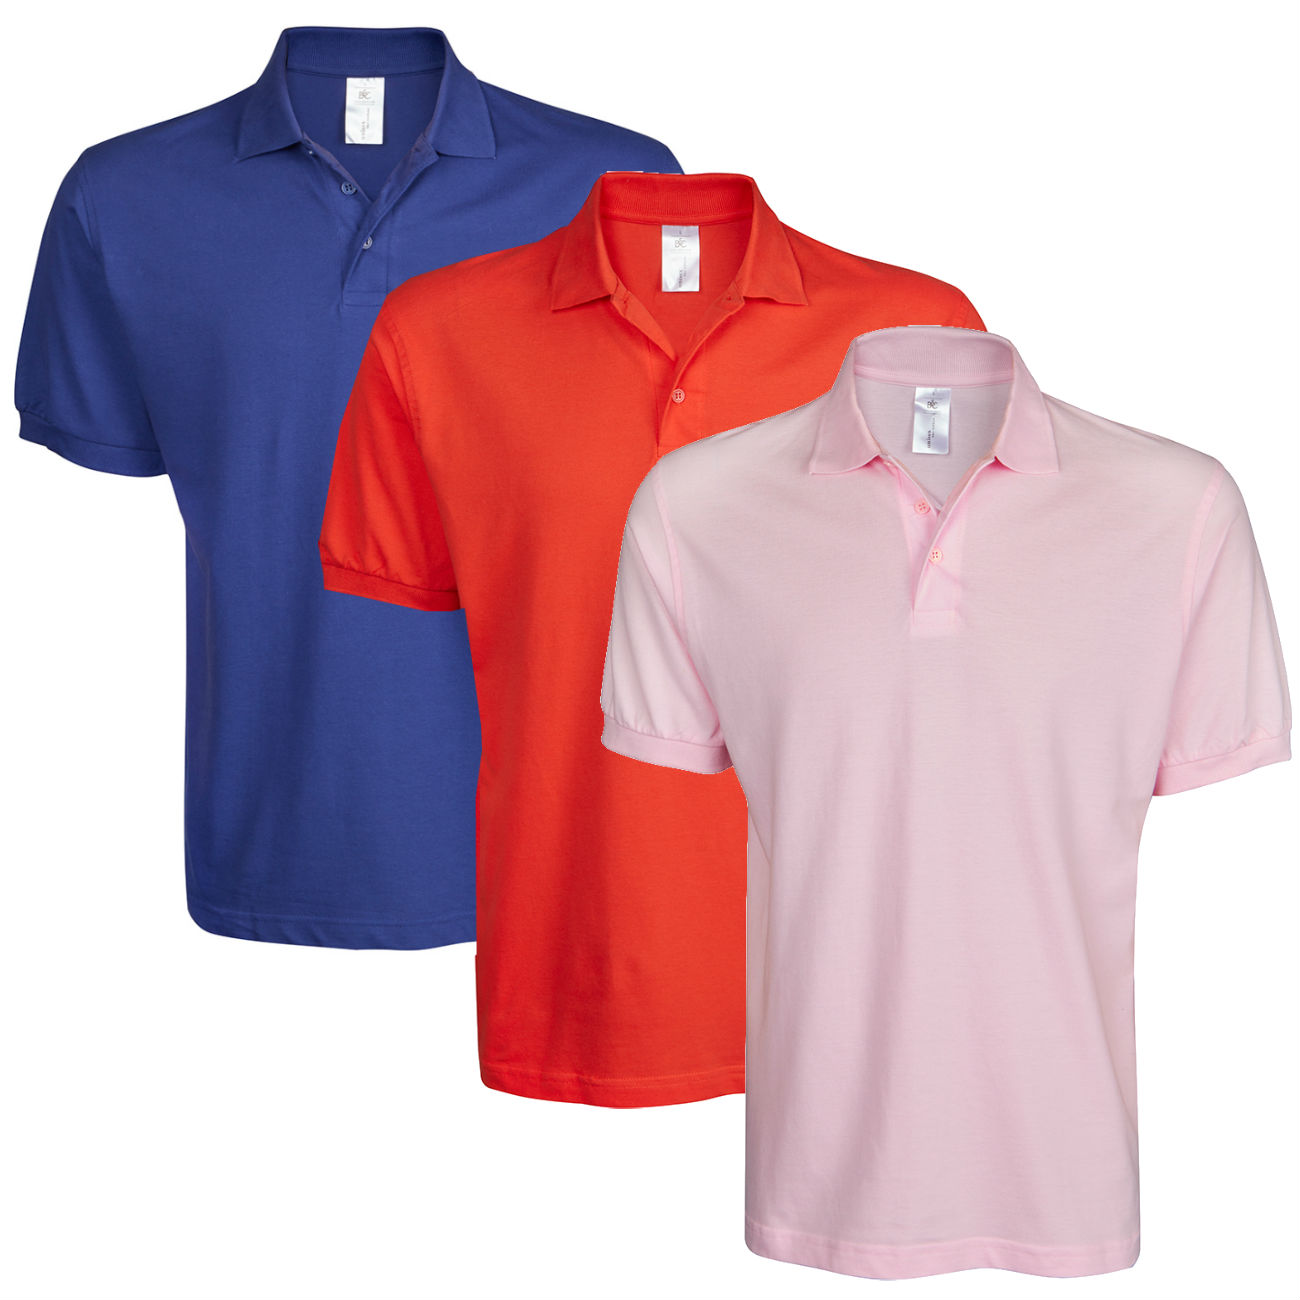 Mens Classic Polo Top Short Sleeve T-Shirt Plain Shirt 100% Cotton | eBay